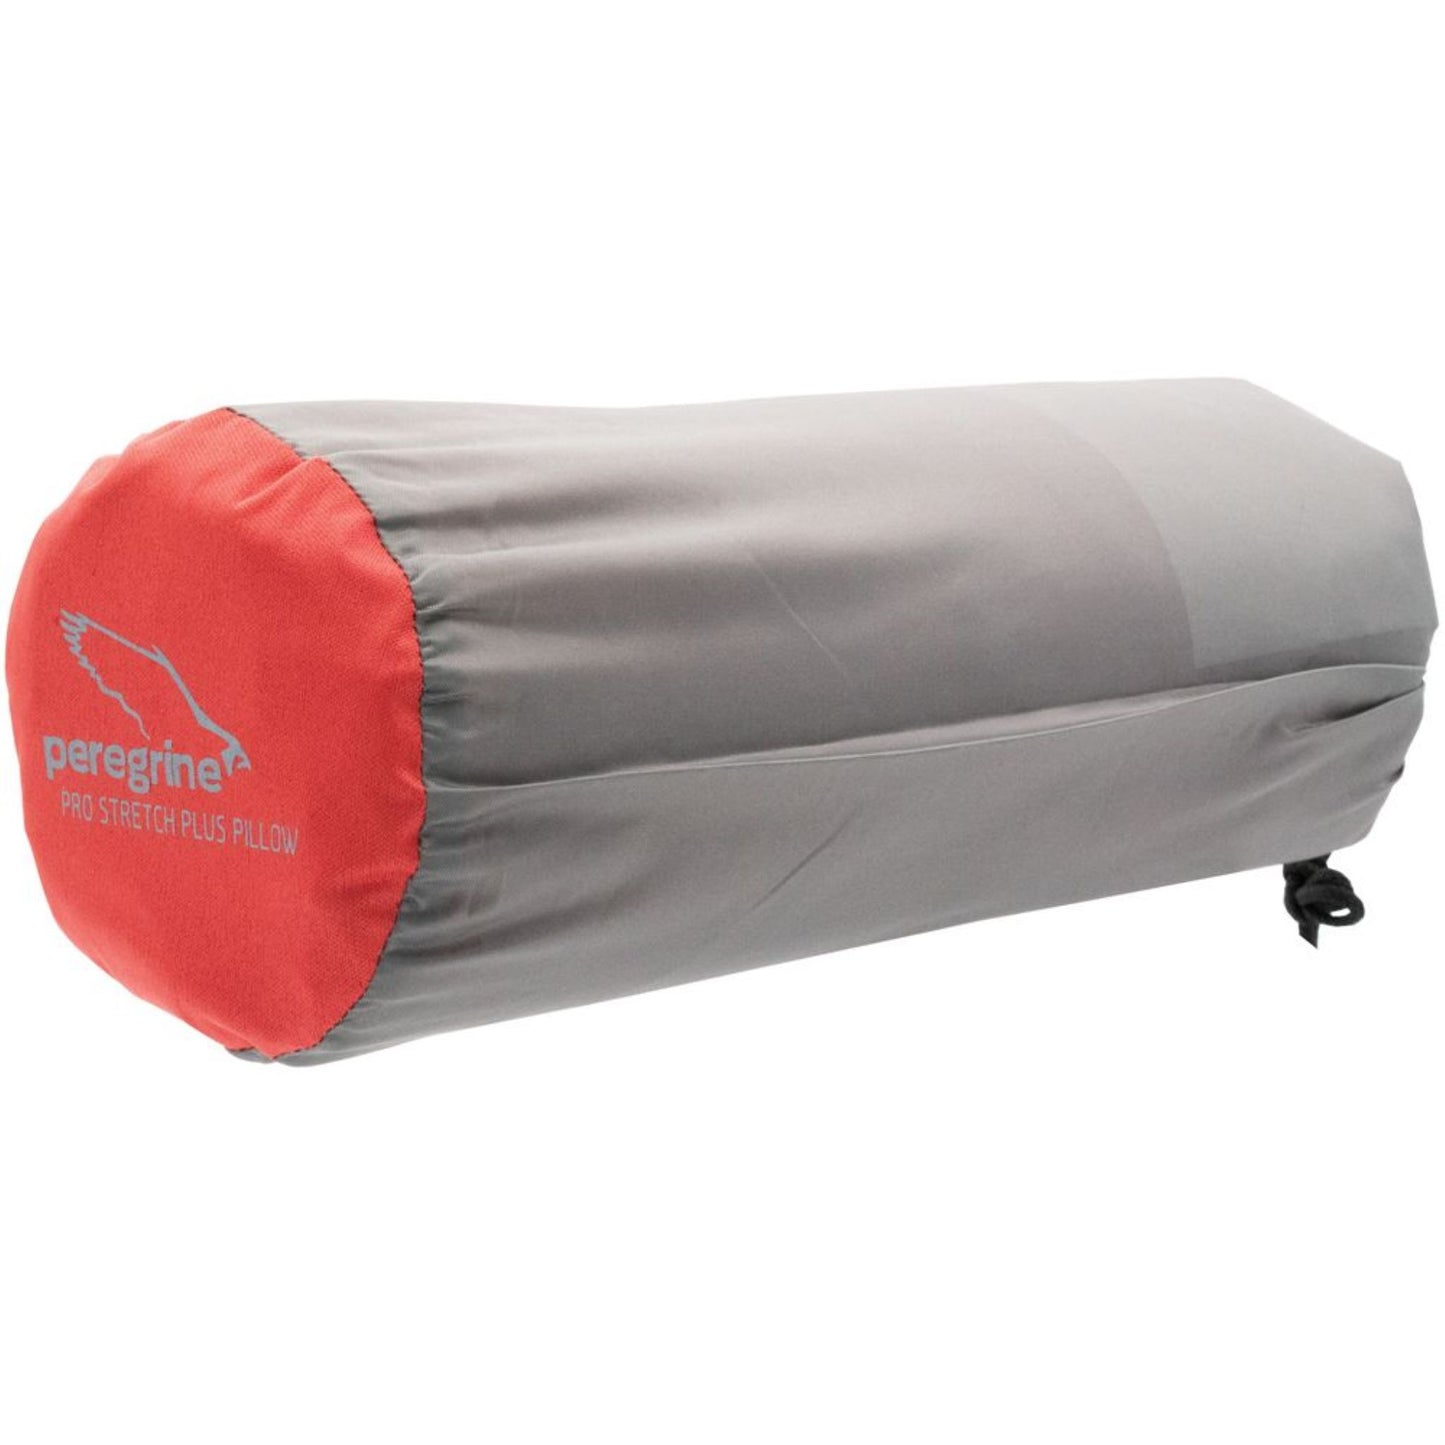 Peregrine Pro Stretch Camp Pillow